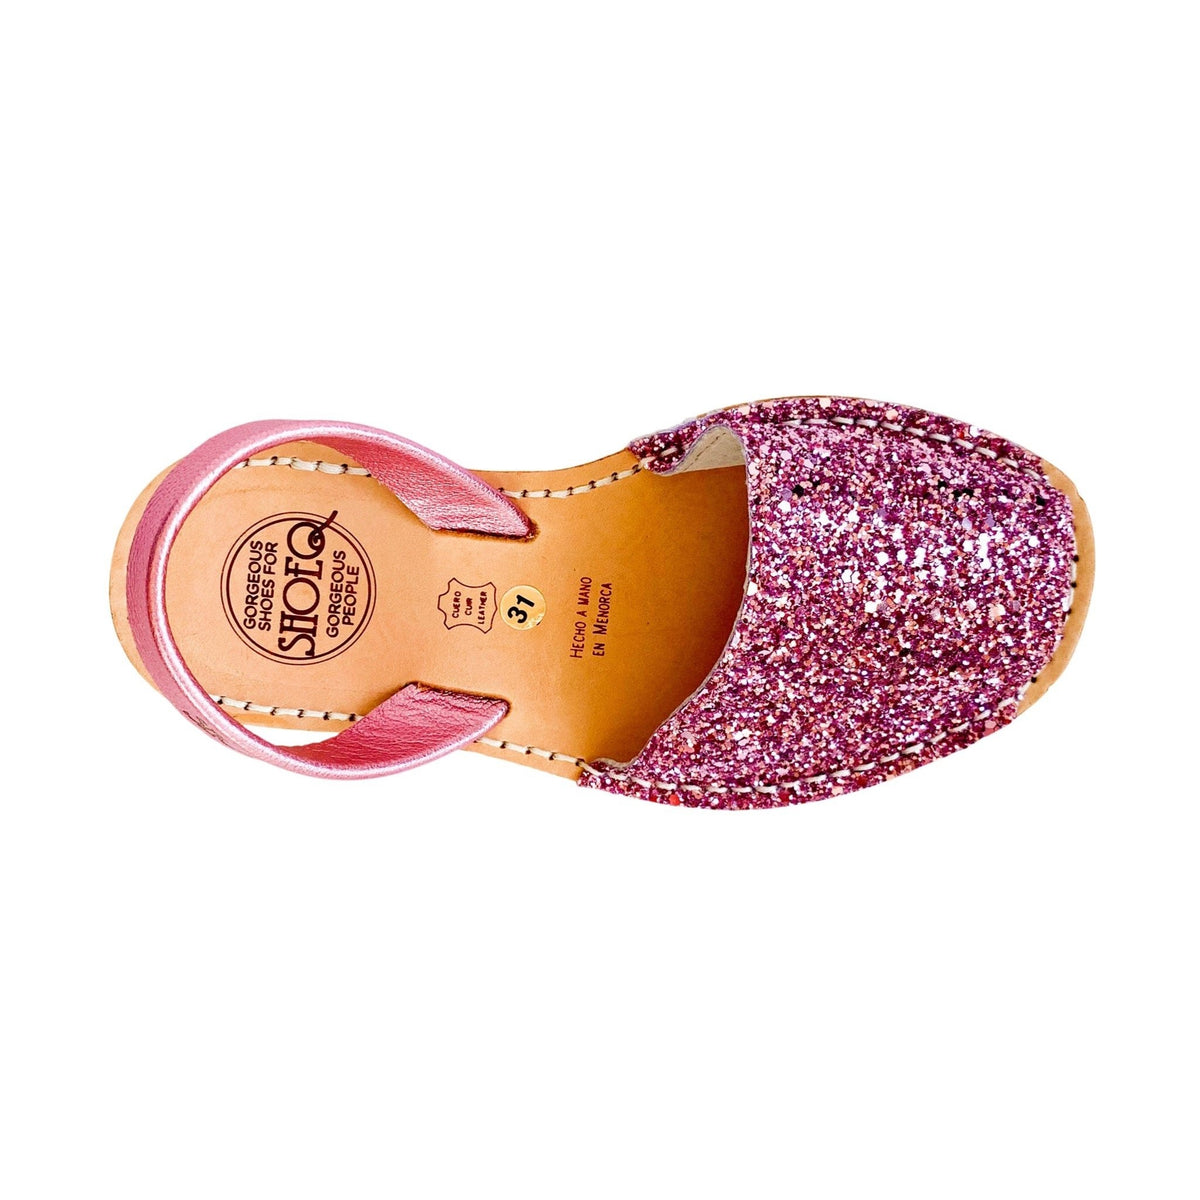 Girls Classic Avarca in Pink Glitter - Shoeq